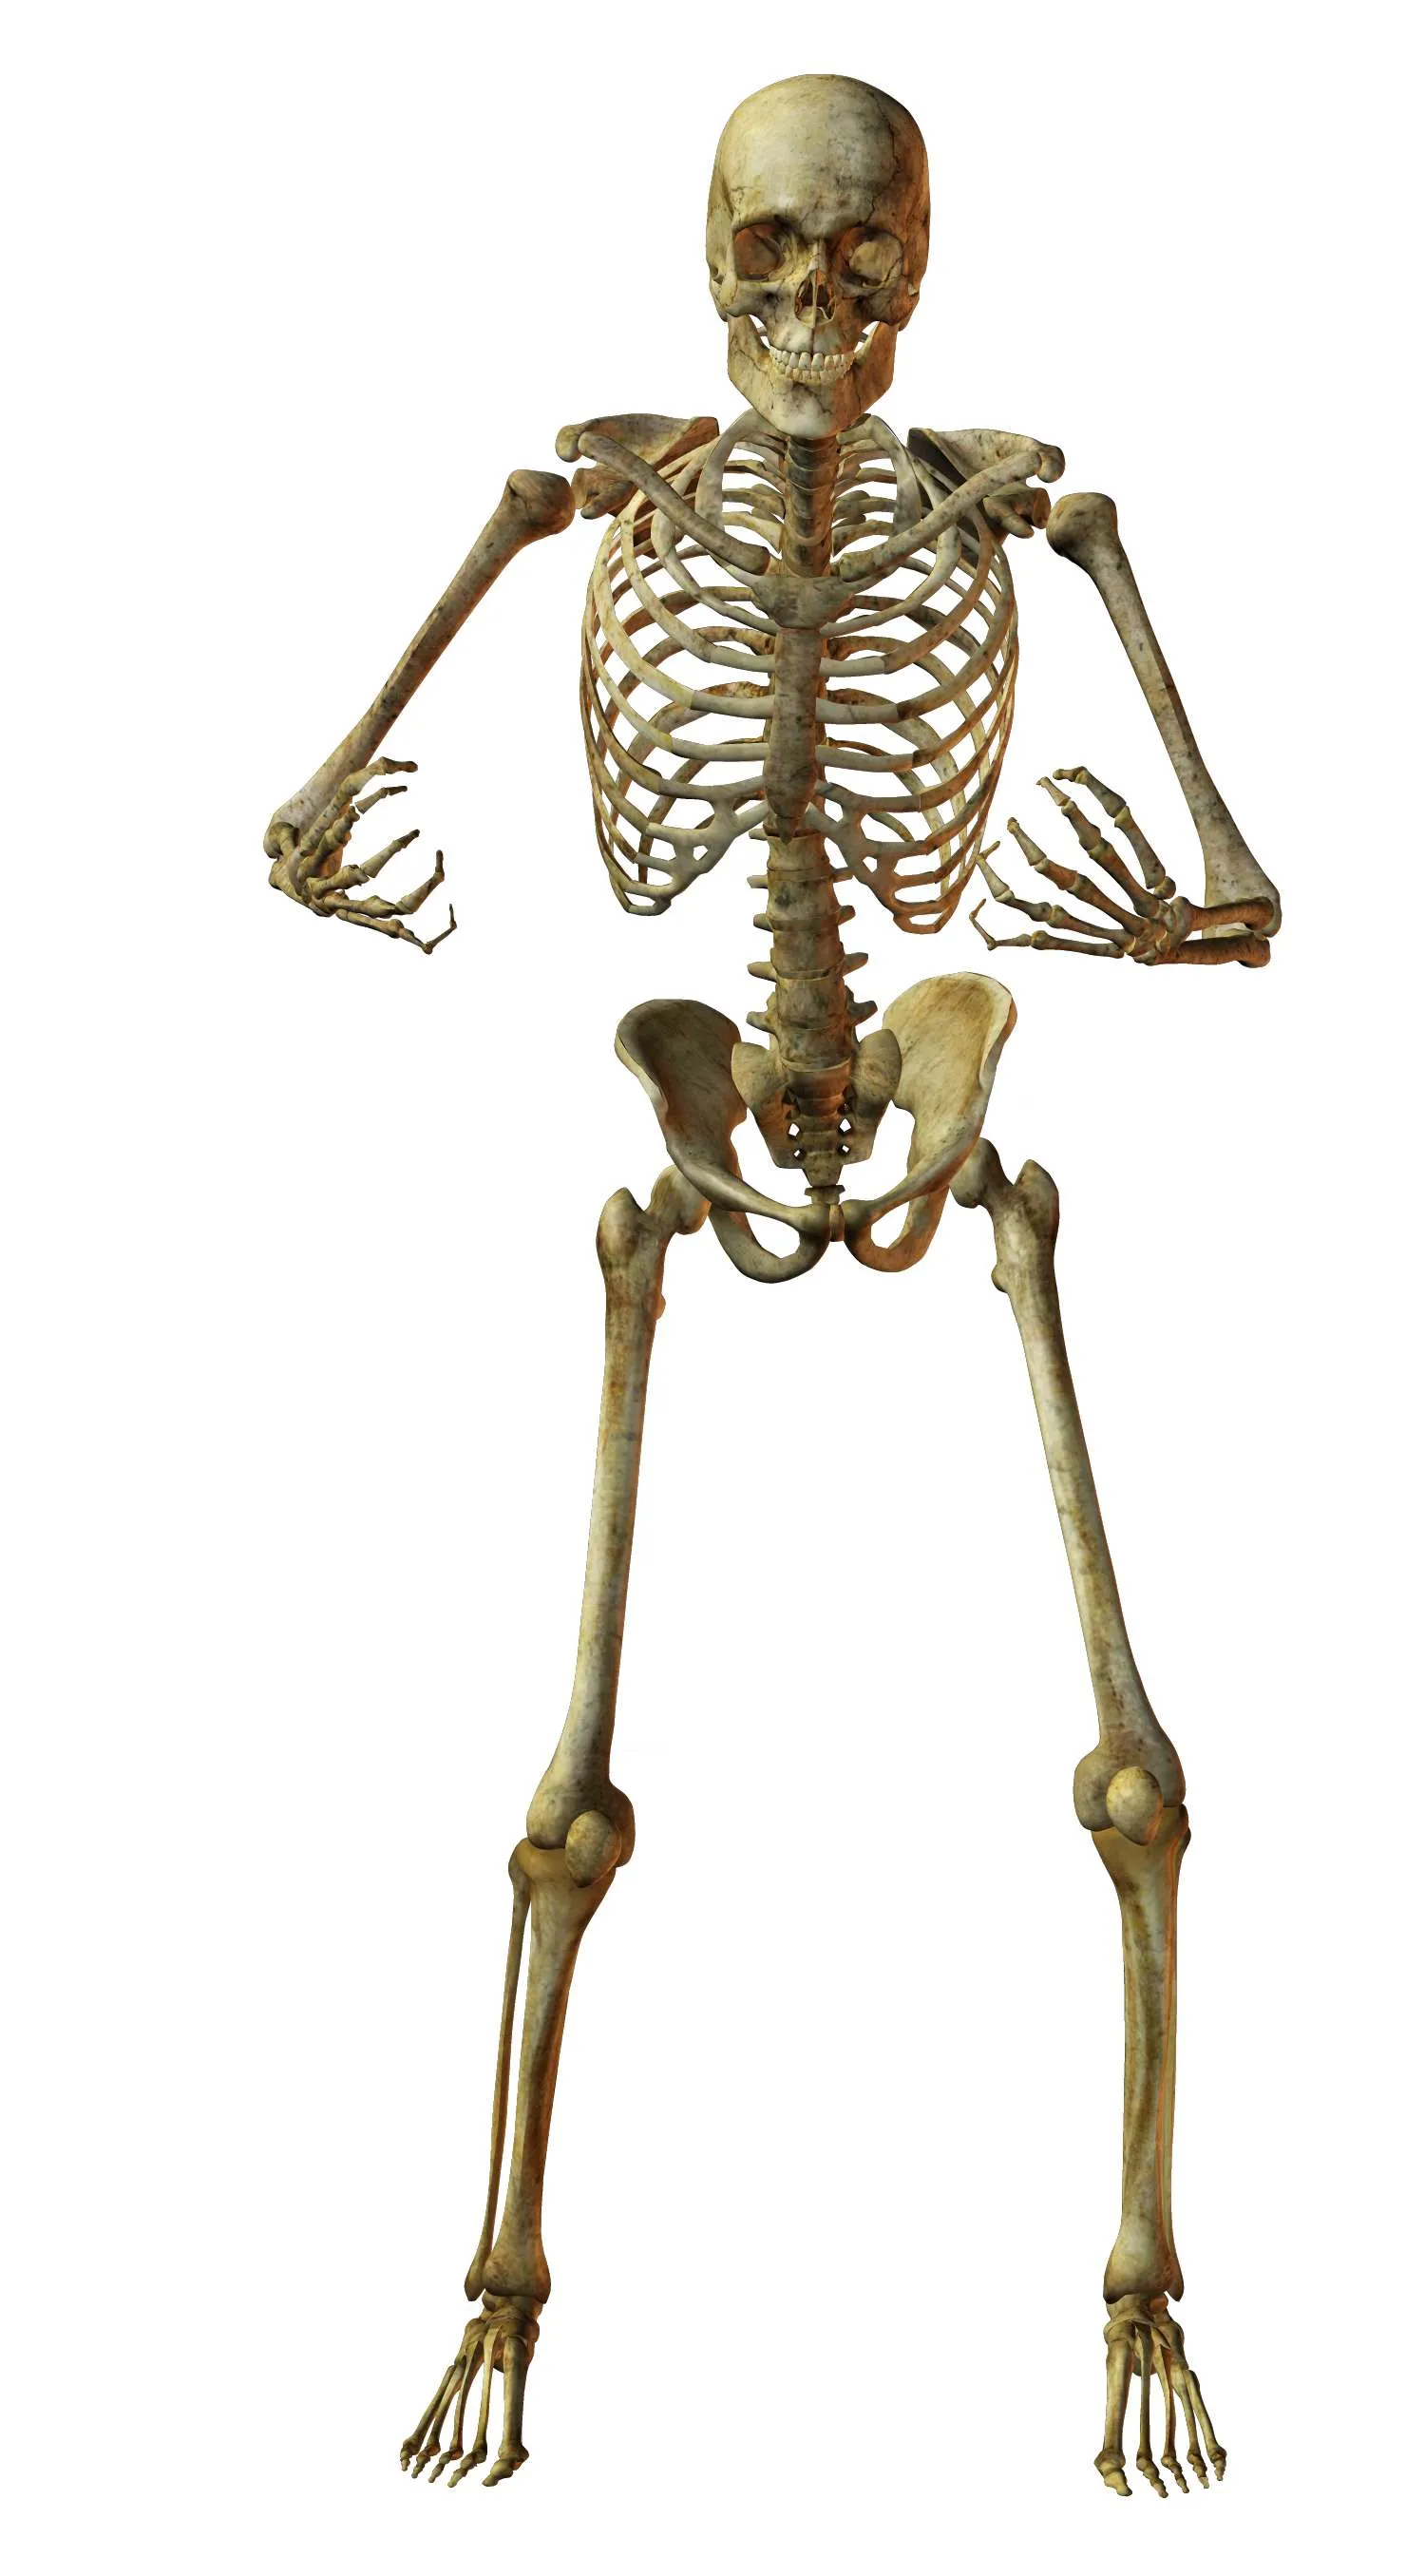 Esqueleto de un bebé animado - Imagui